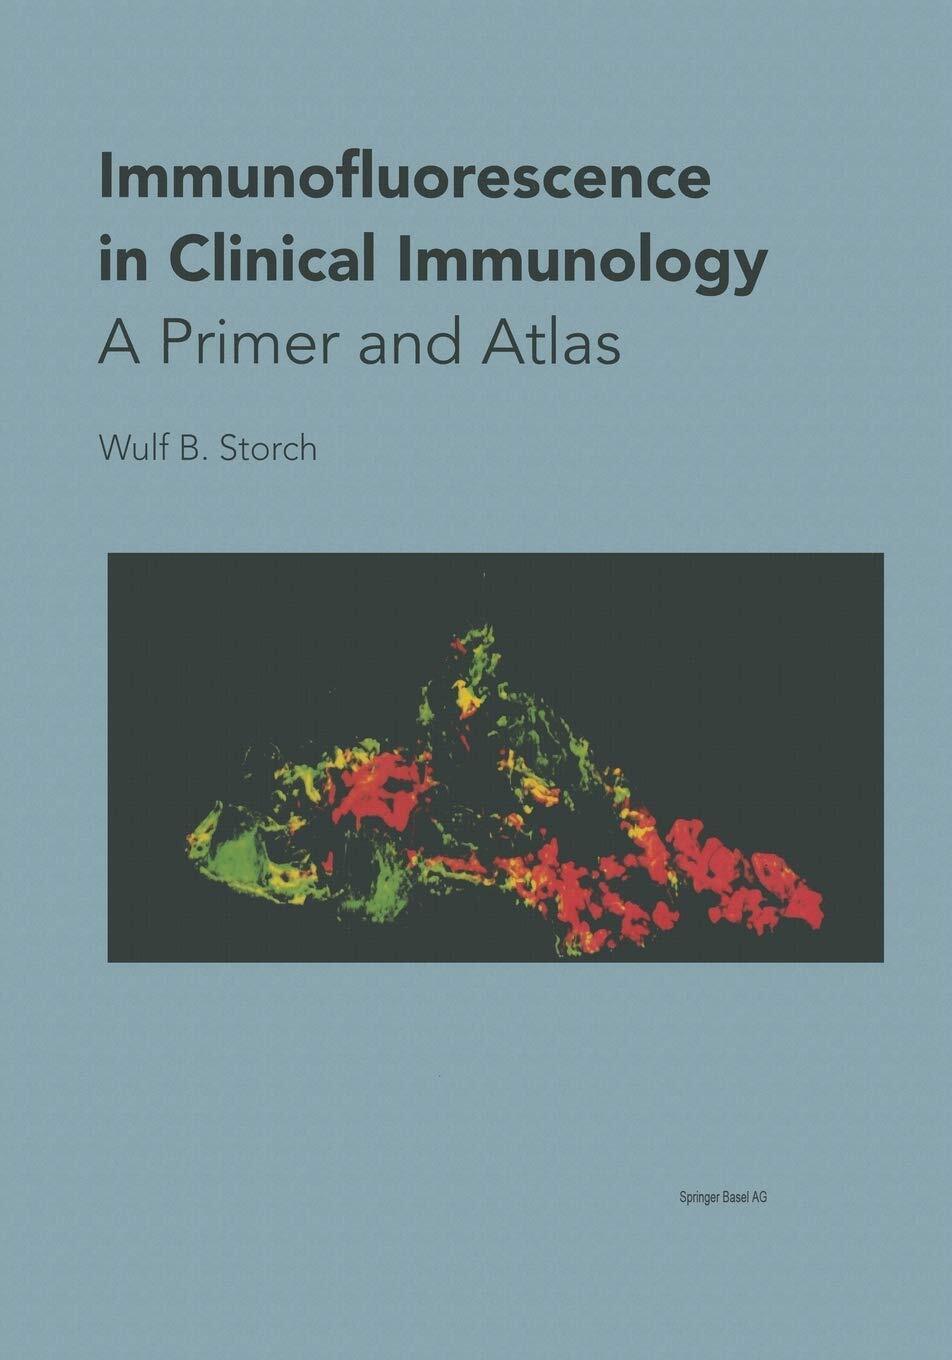 Immunofluorescence in Clinical Immunology - Wulf B. Storch - Birkh?user, 2012